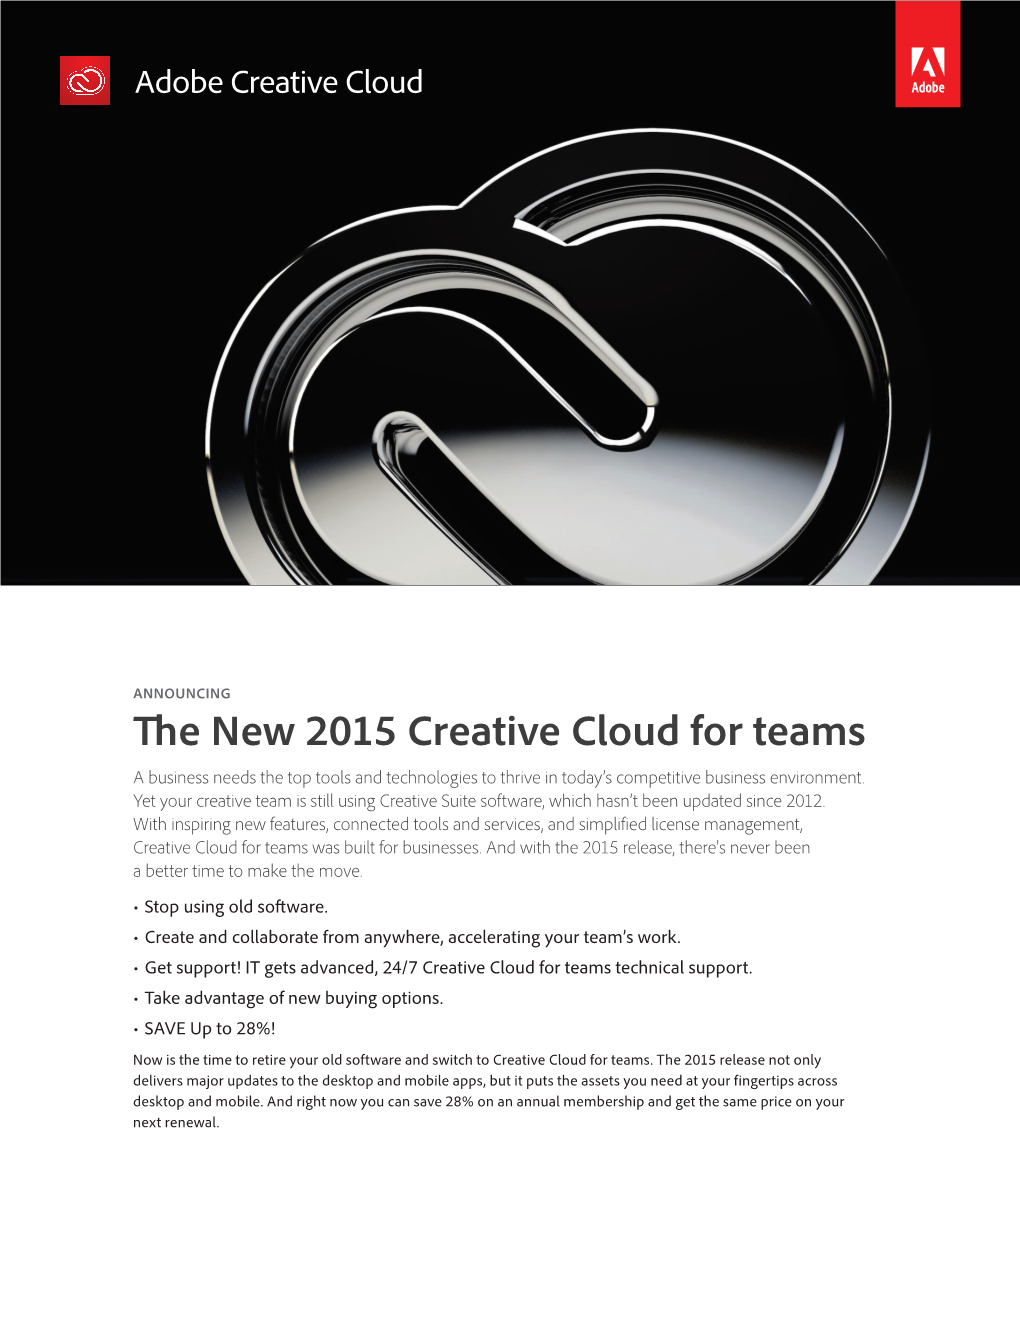 Adobe Creative Cloud for Enterprise Overview